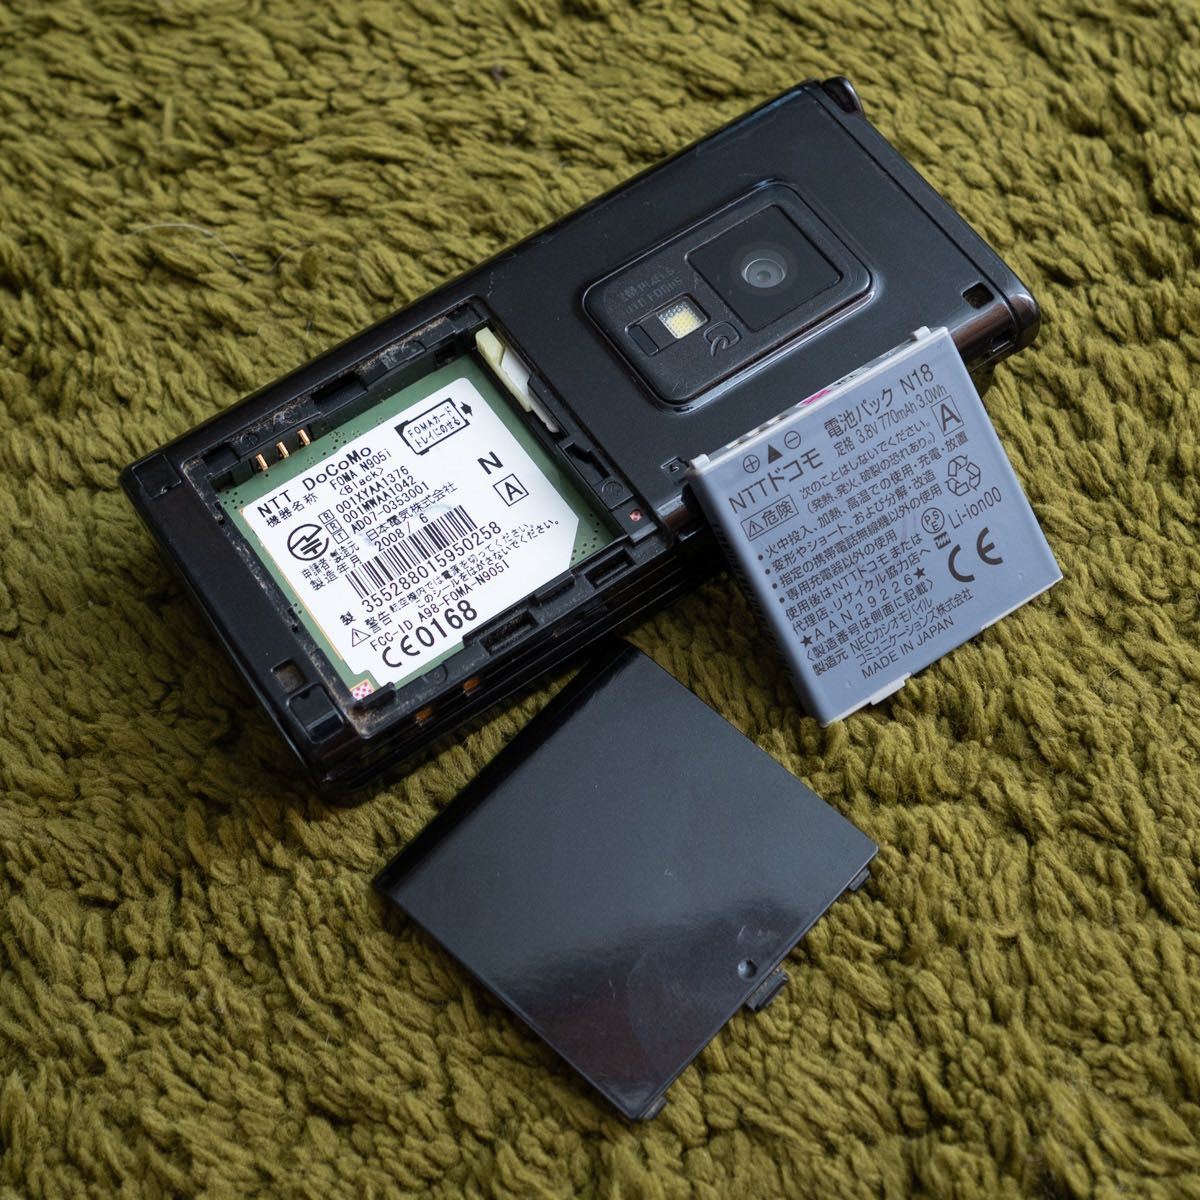 docomo NEC N905i 黒 携帯電話 本体ドコモ ワンセグ携帯_画像4